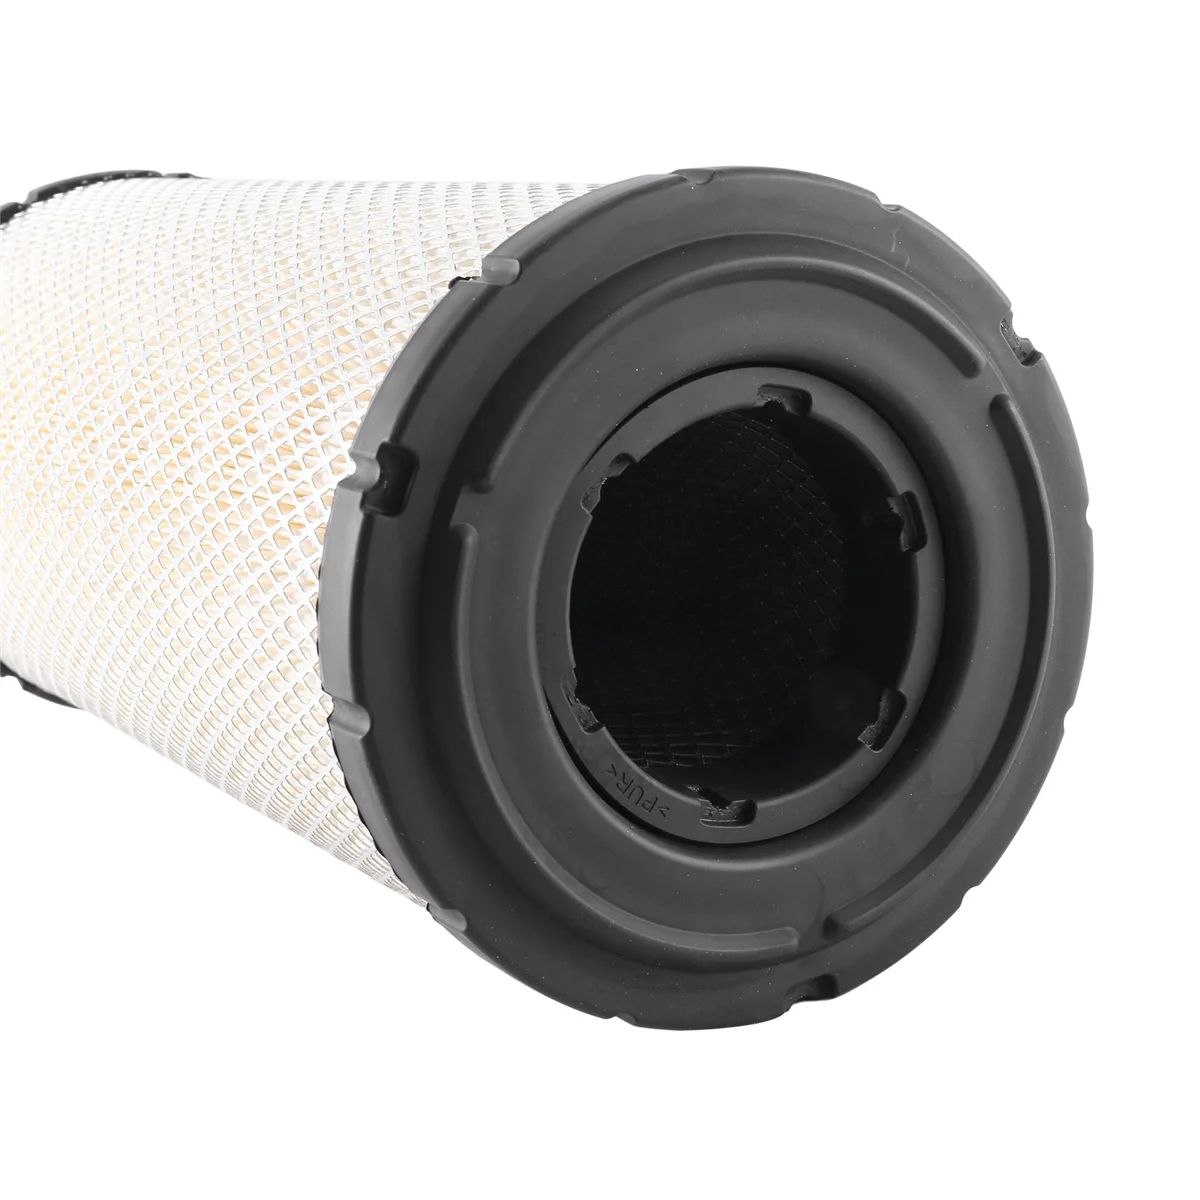 

Air Filter Fits Baldwin Donaldson RS3544 P828889 for New Holland Loaders / John Deere / Caterpillar / Volvo / Donaldson